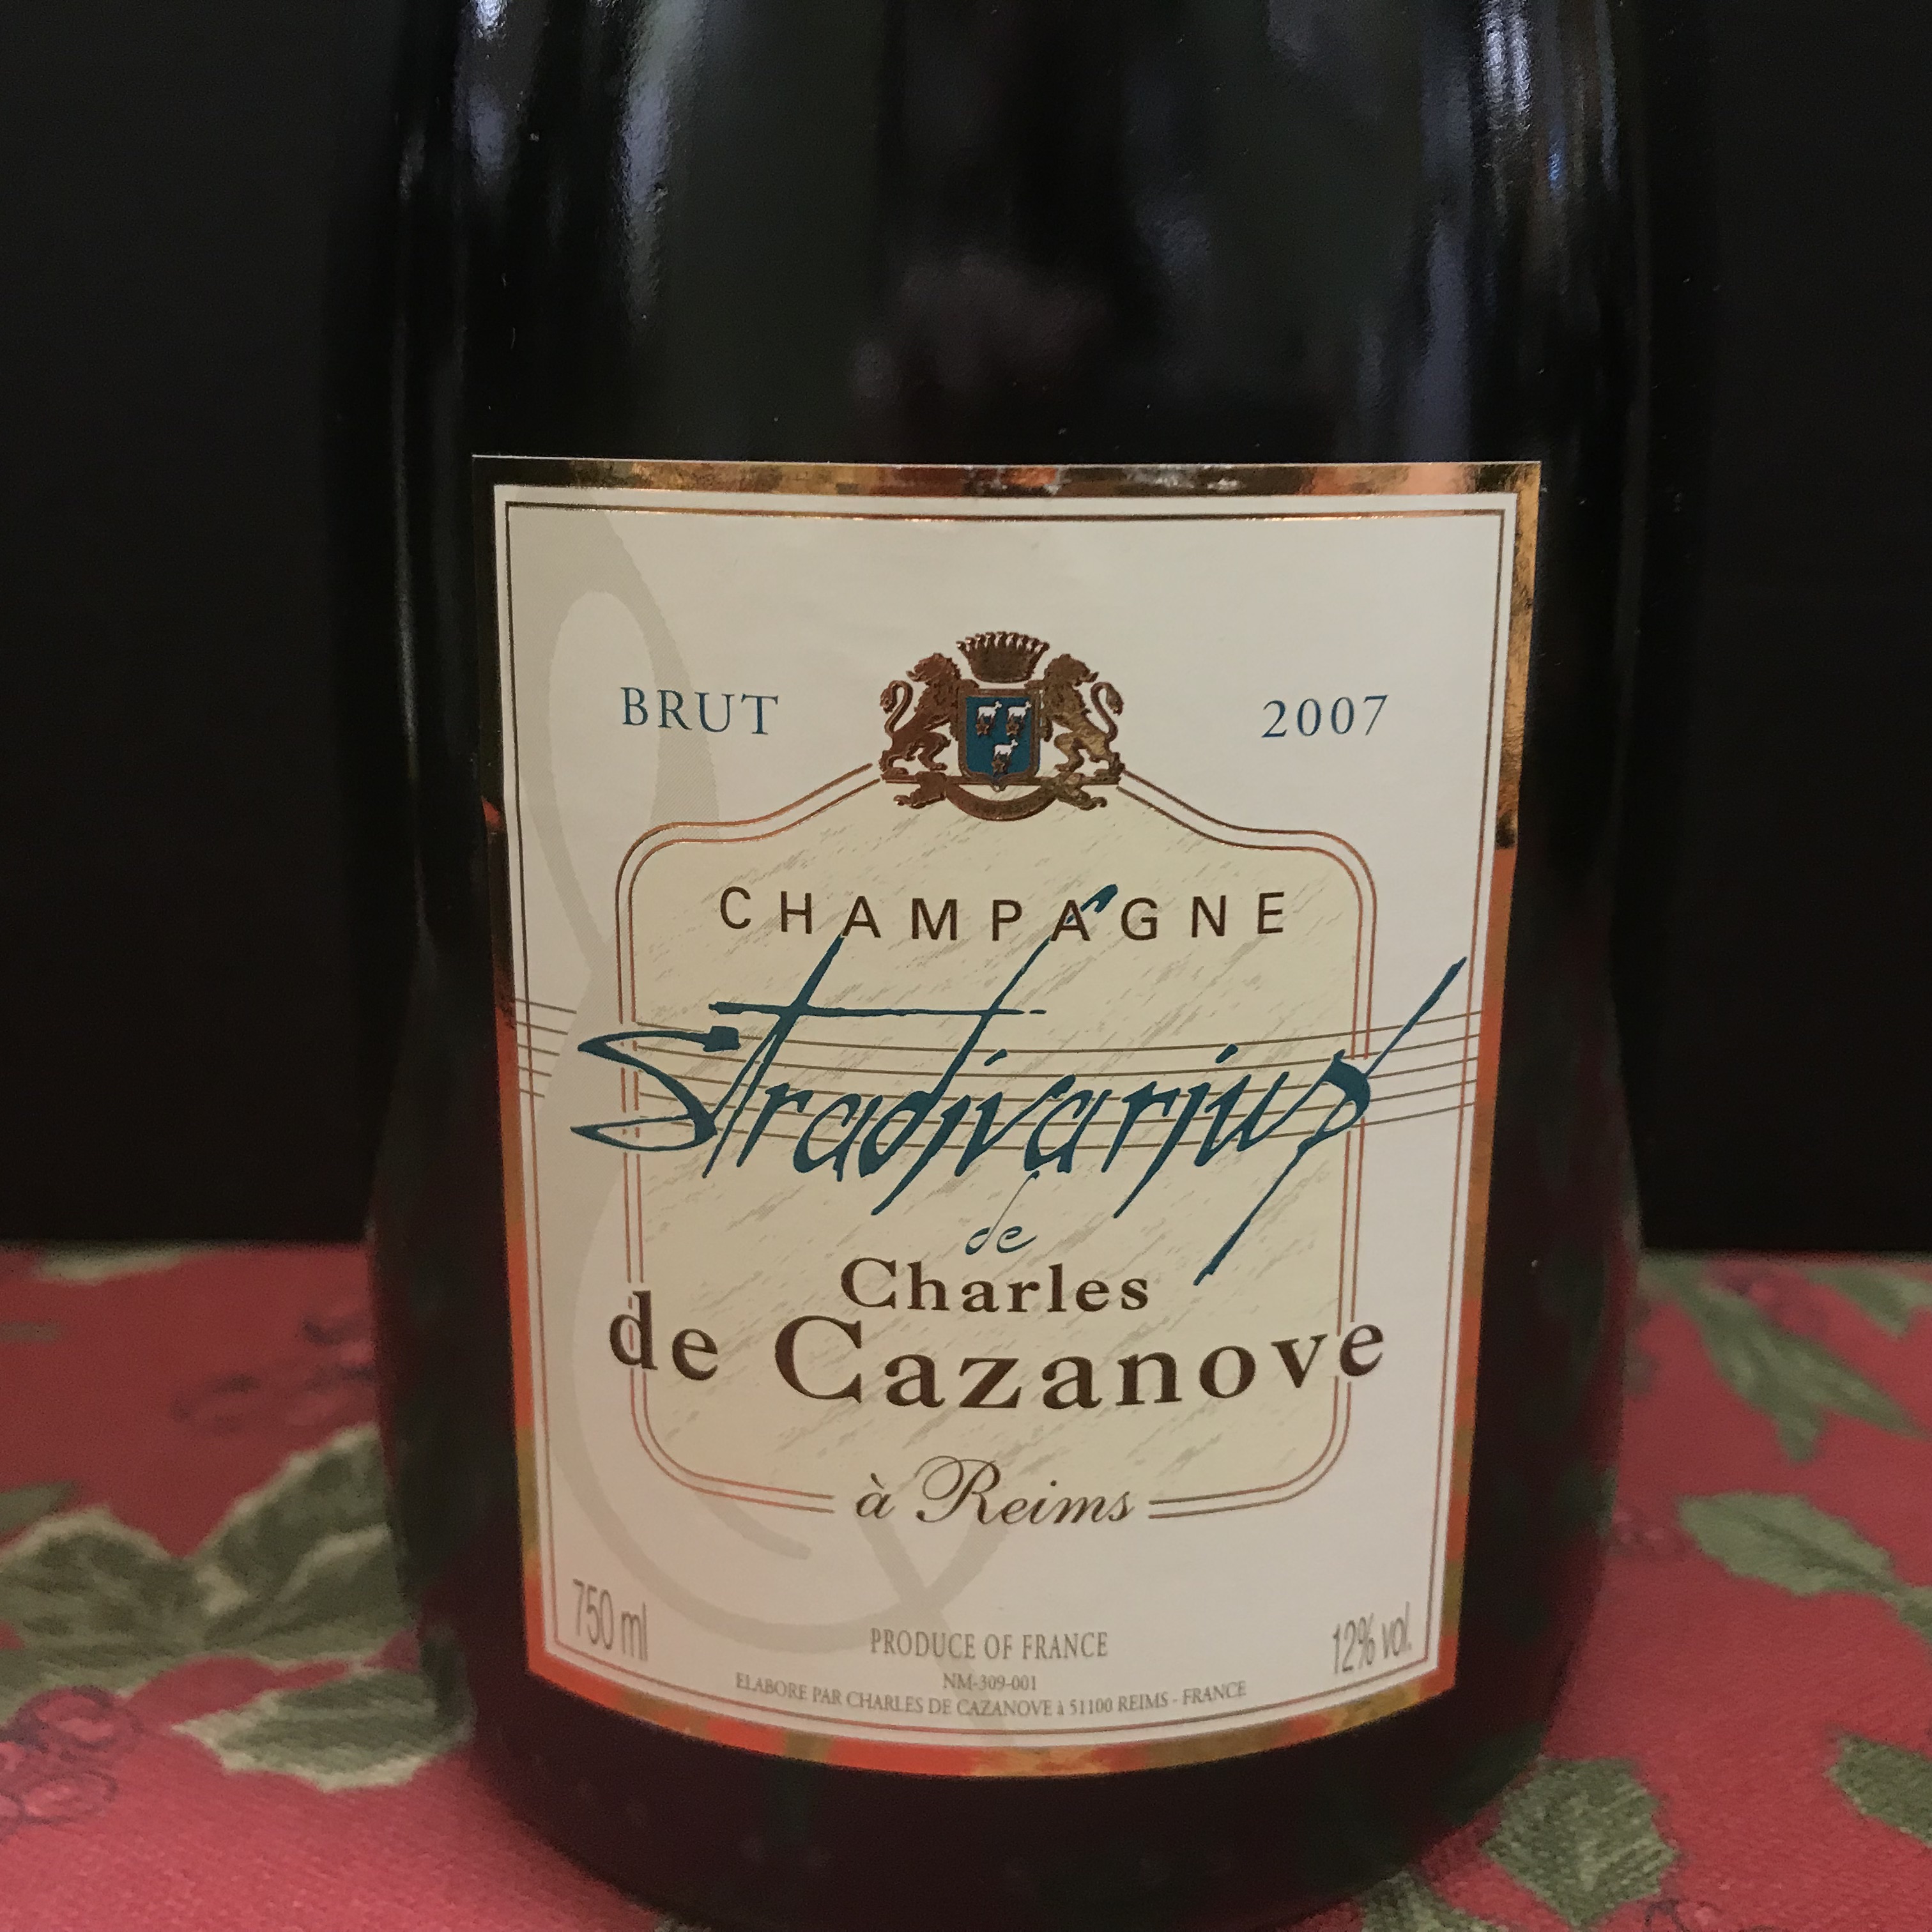 Charles de Cazanove Stradivarius Champagne Brut 2007